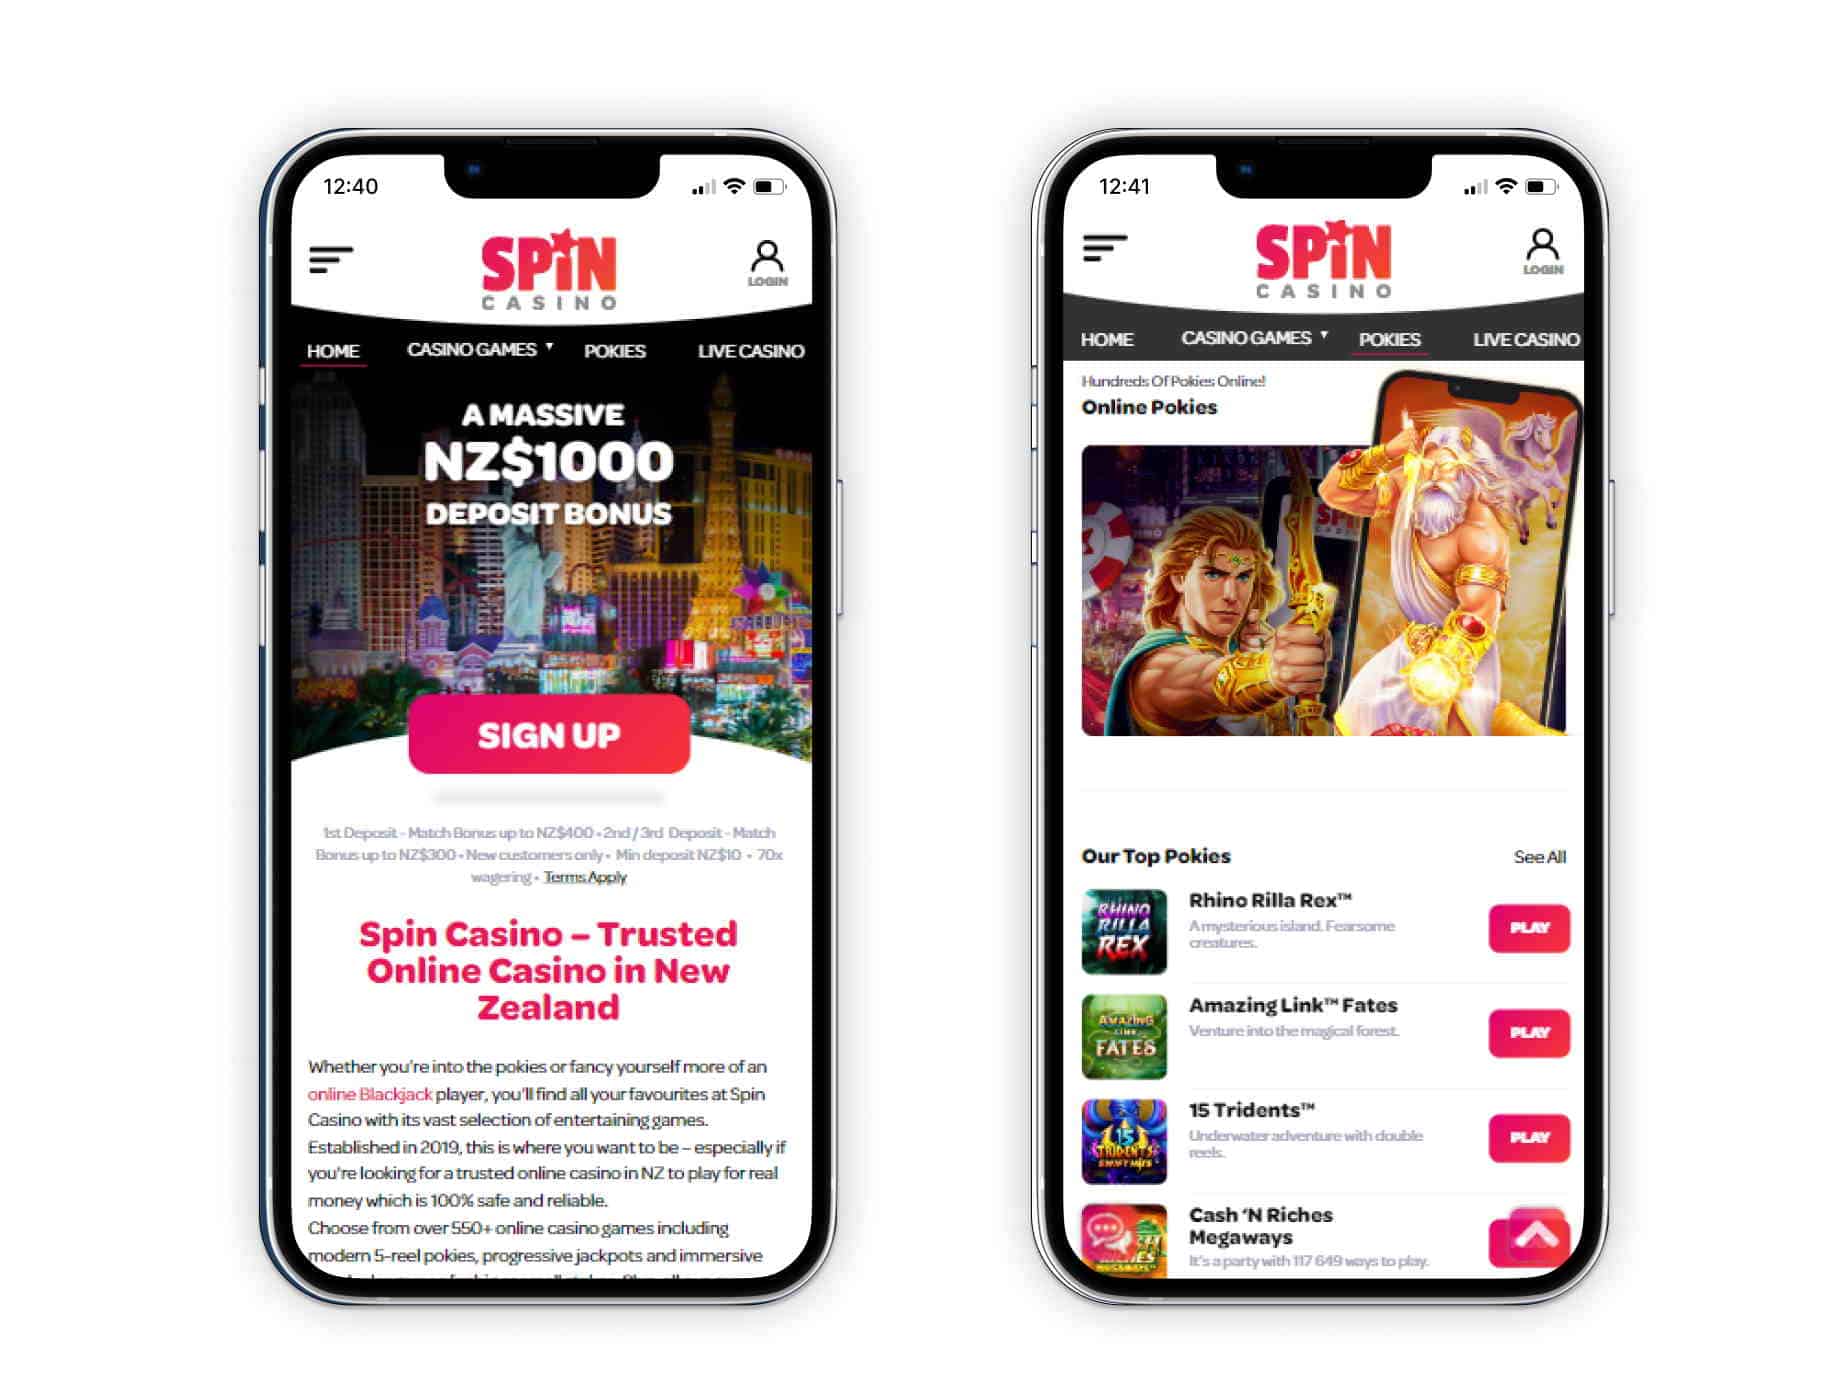 Spin Casino Mobile App online Mobile Gambling New Zealand